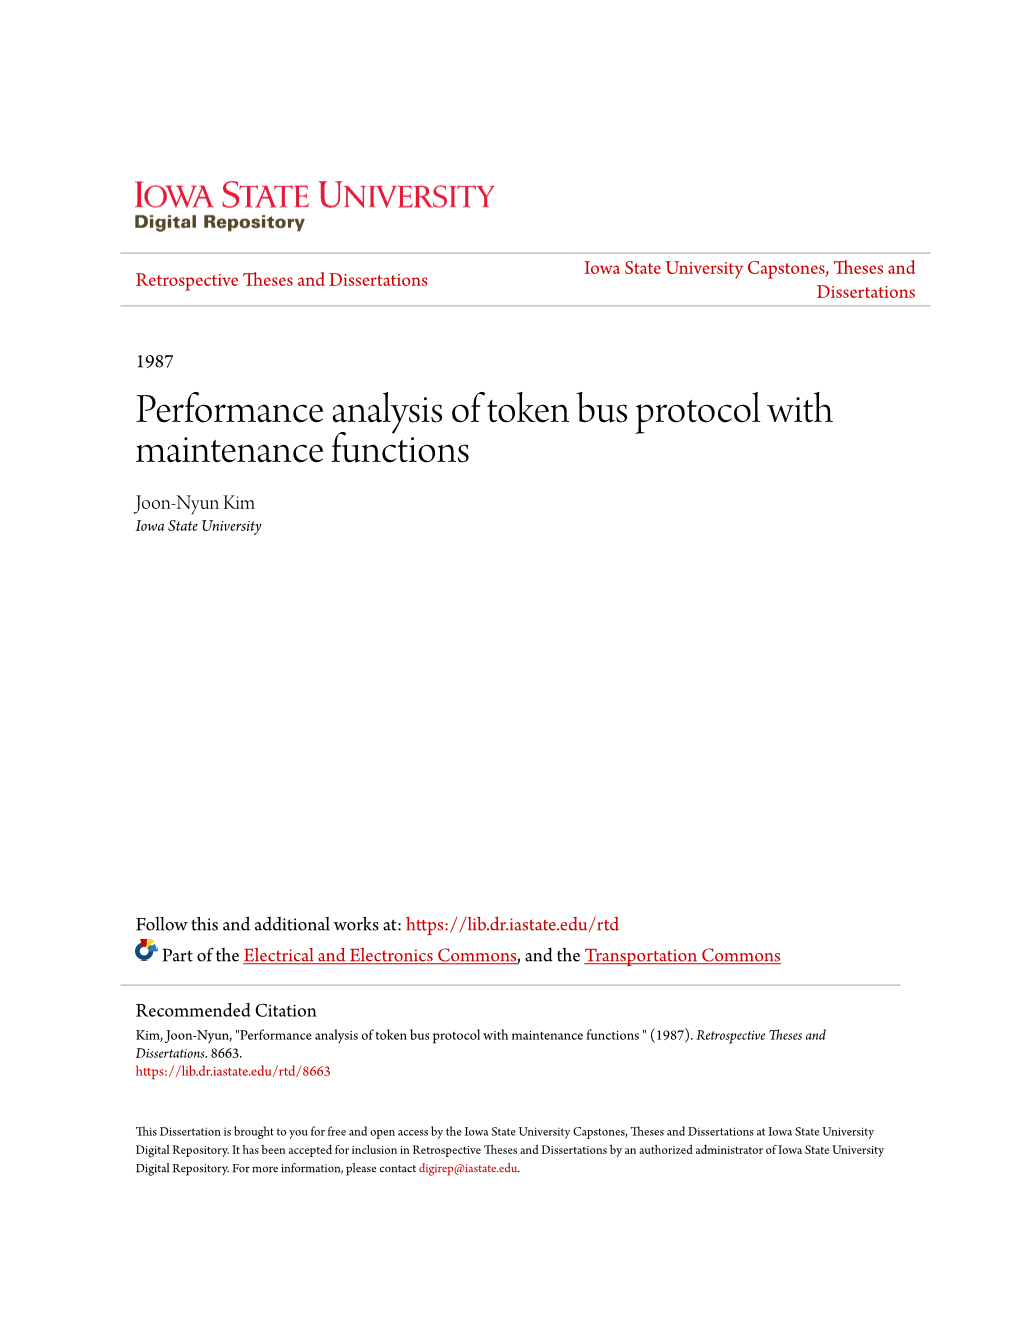 Performance Analysis of Token Bus Protocol with Maintenance Functions Joon-Nyun Kim Iowa State University